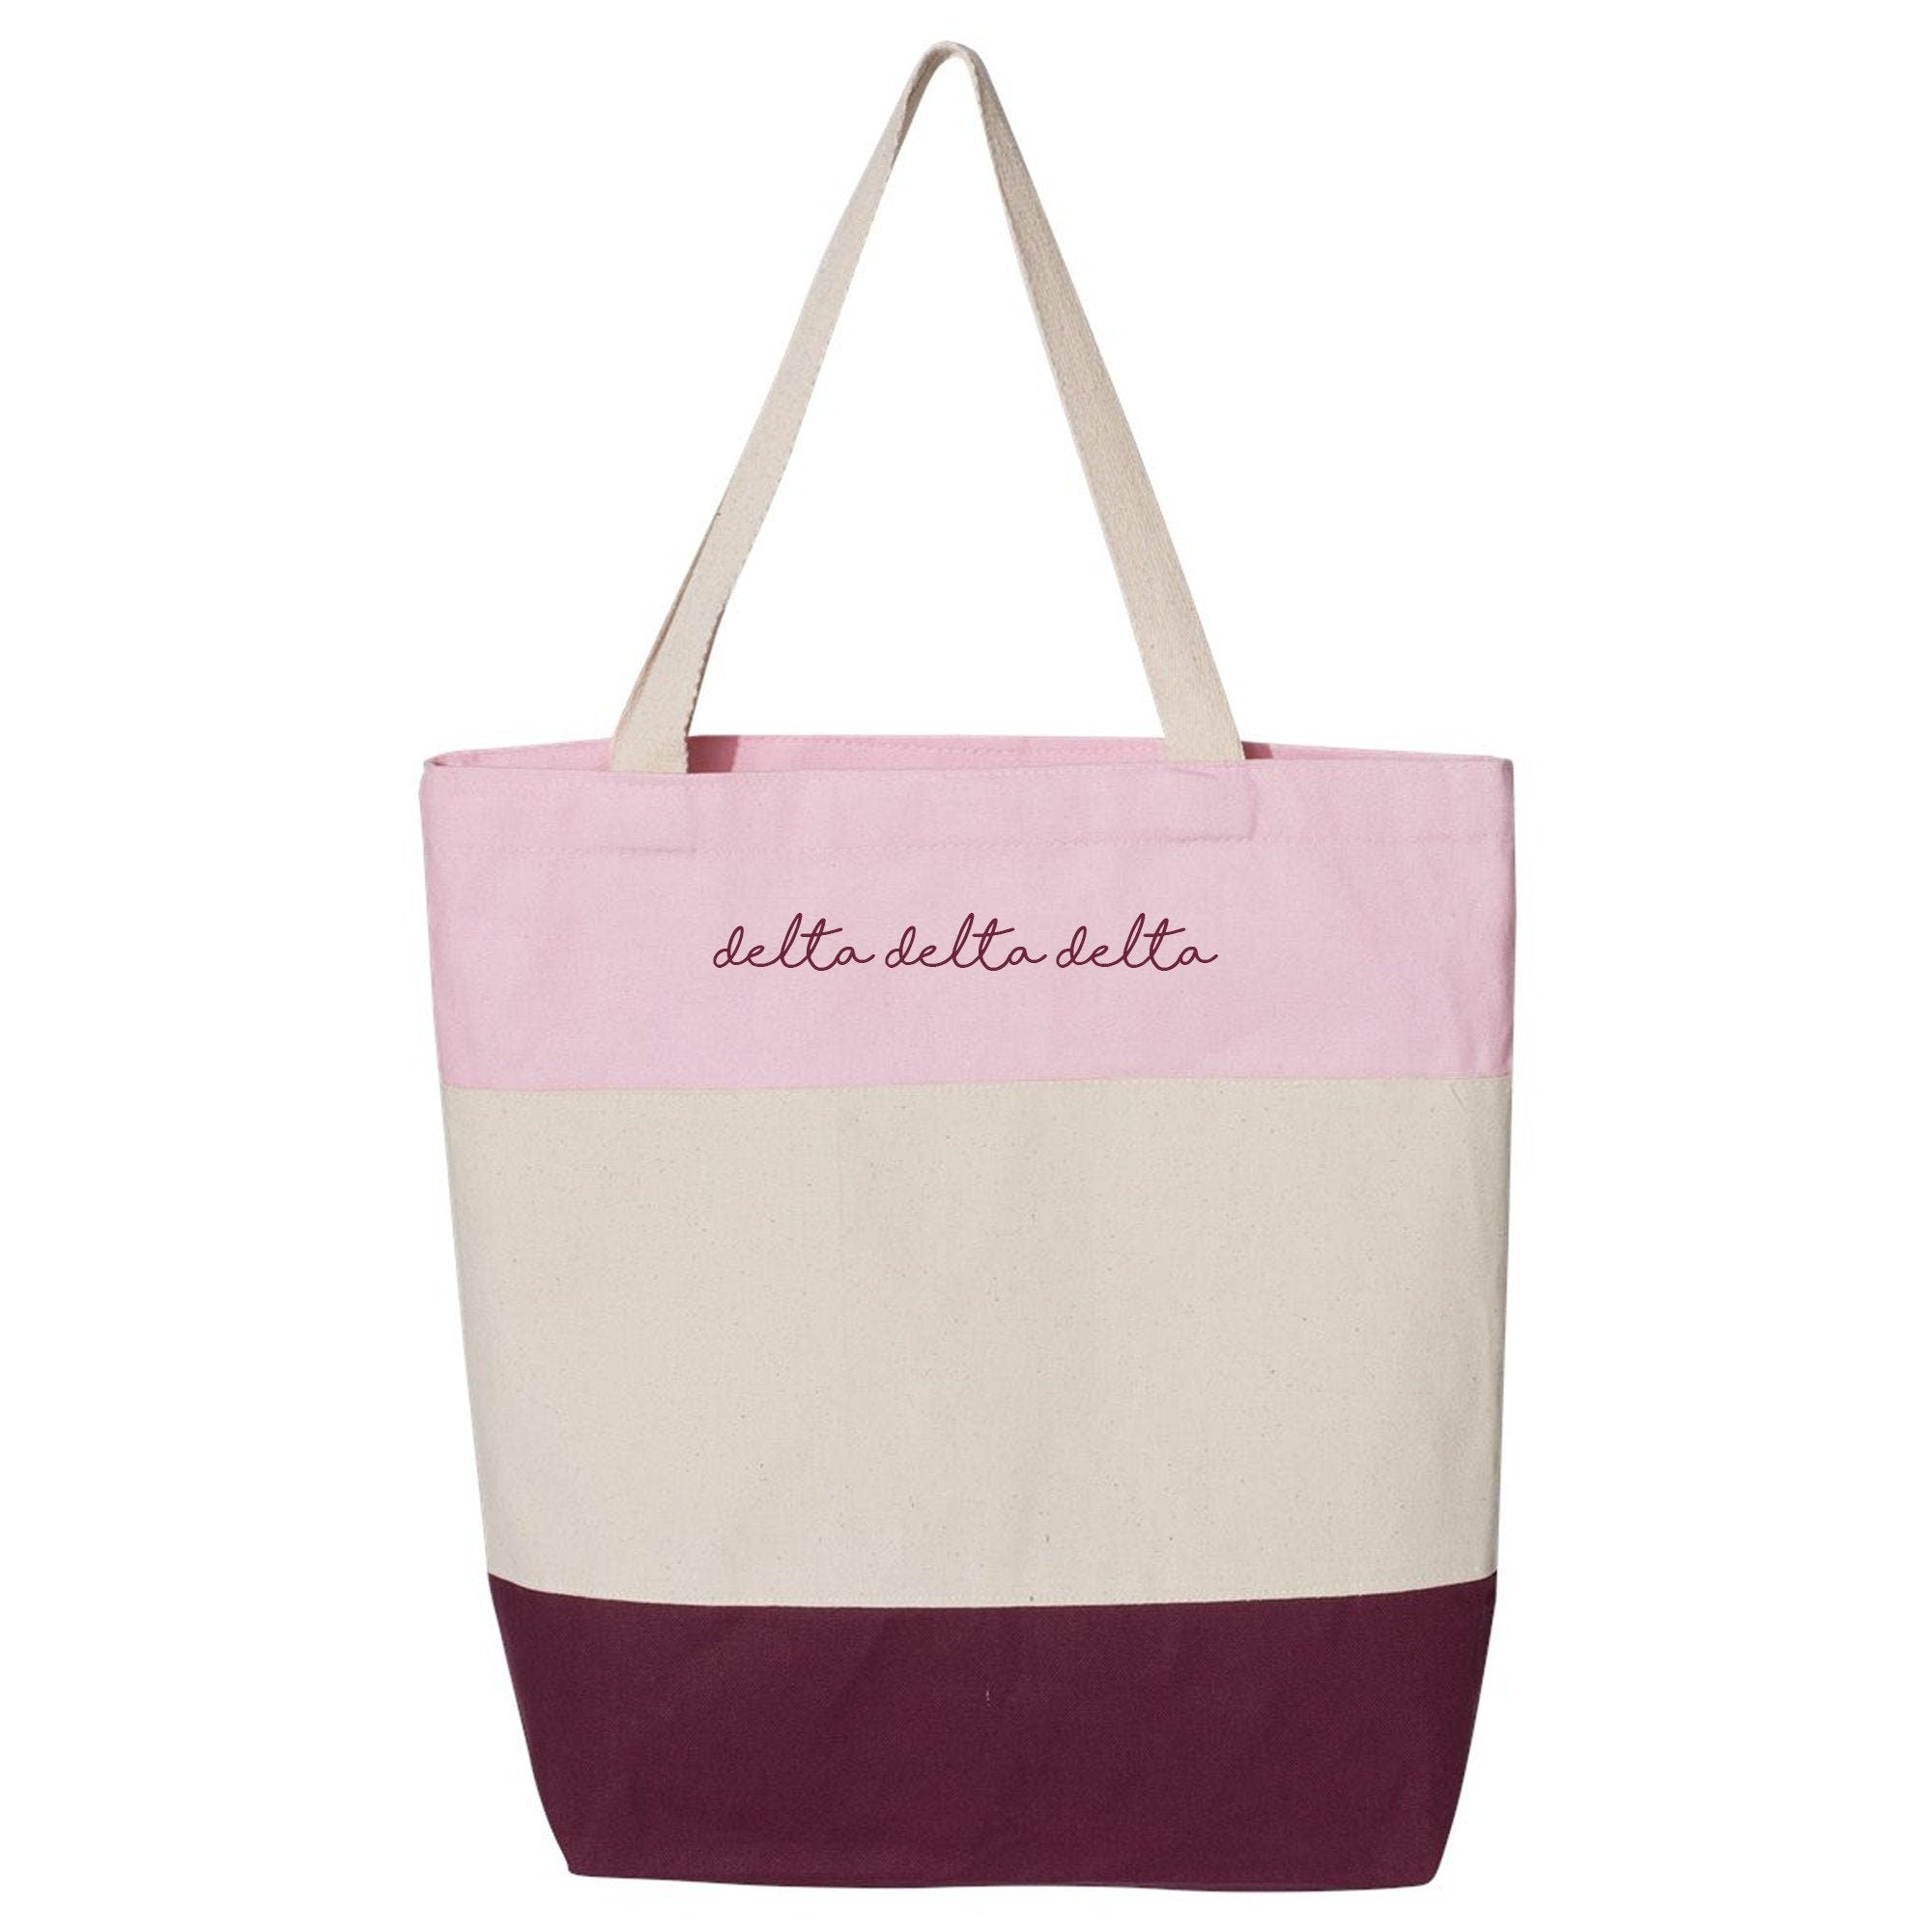 Delta Delta Delta - Tote Bag, Sorority Gift, Bid Day Gift, Big & Little Reveal - Go Greek Chic